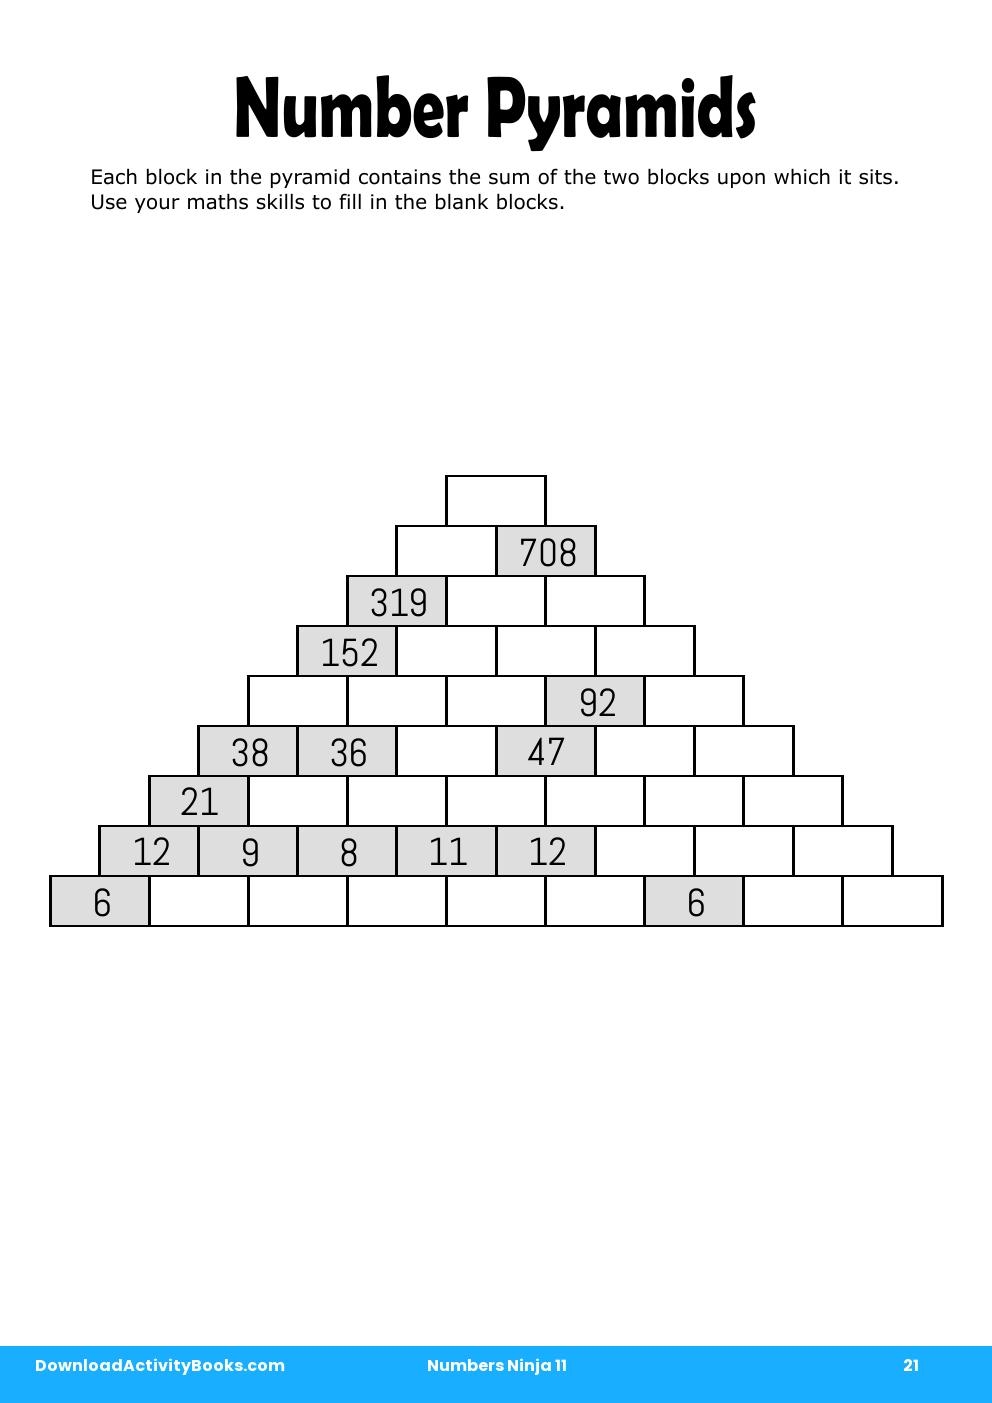 Number Pyramids in Numbers Ninja 11